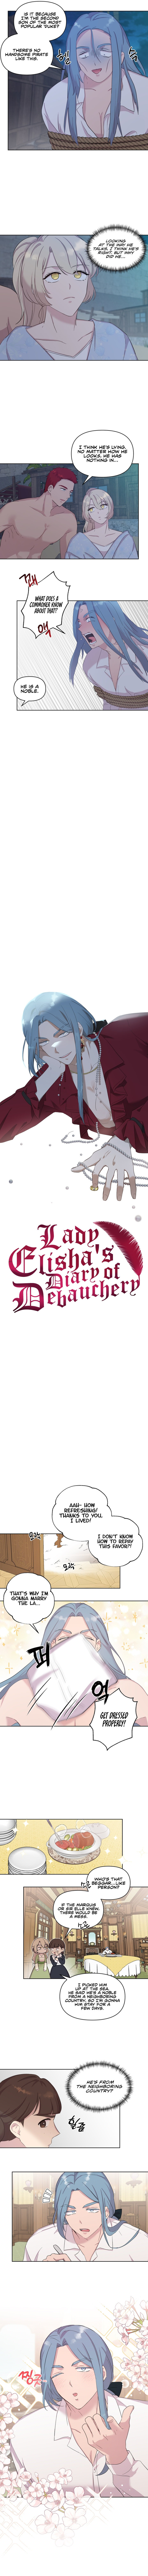 Lady Elisha’s Diary of Debauchery - Chapter 25 Page 2